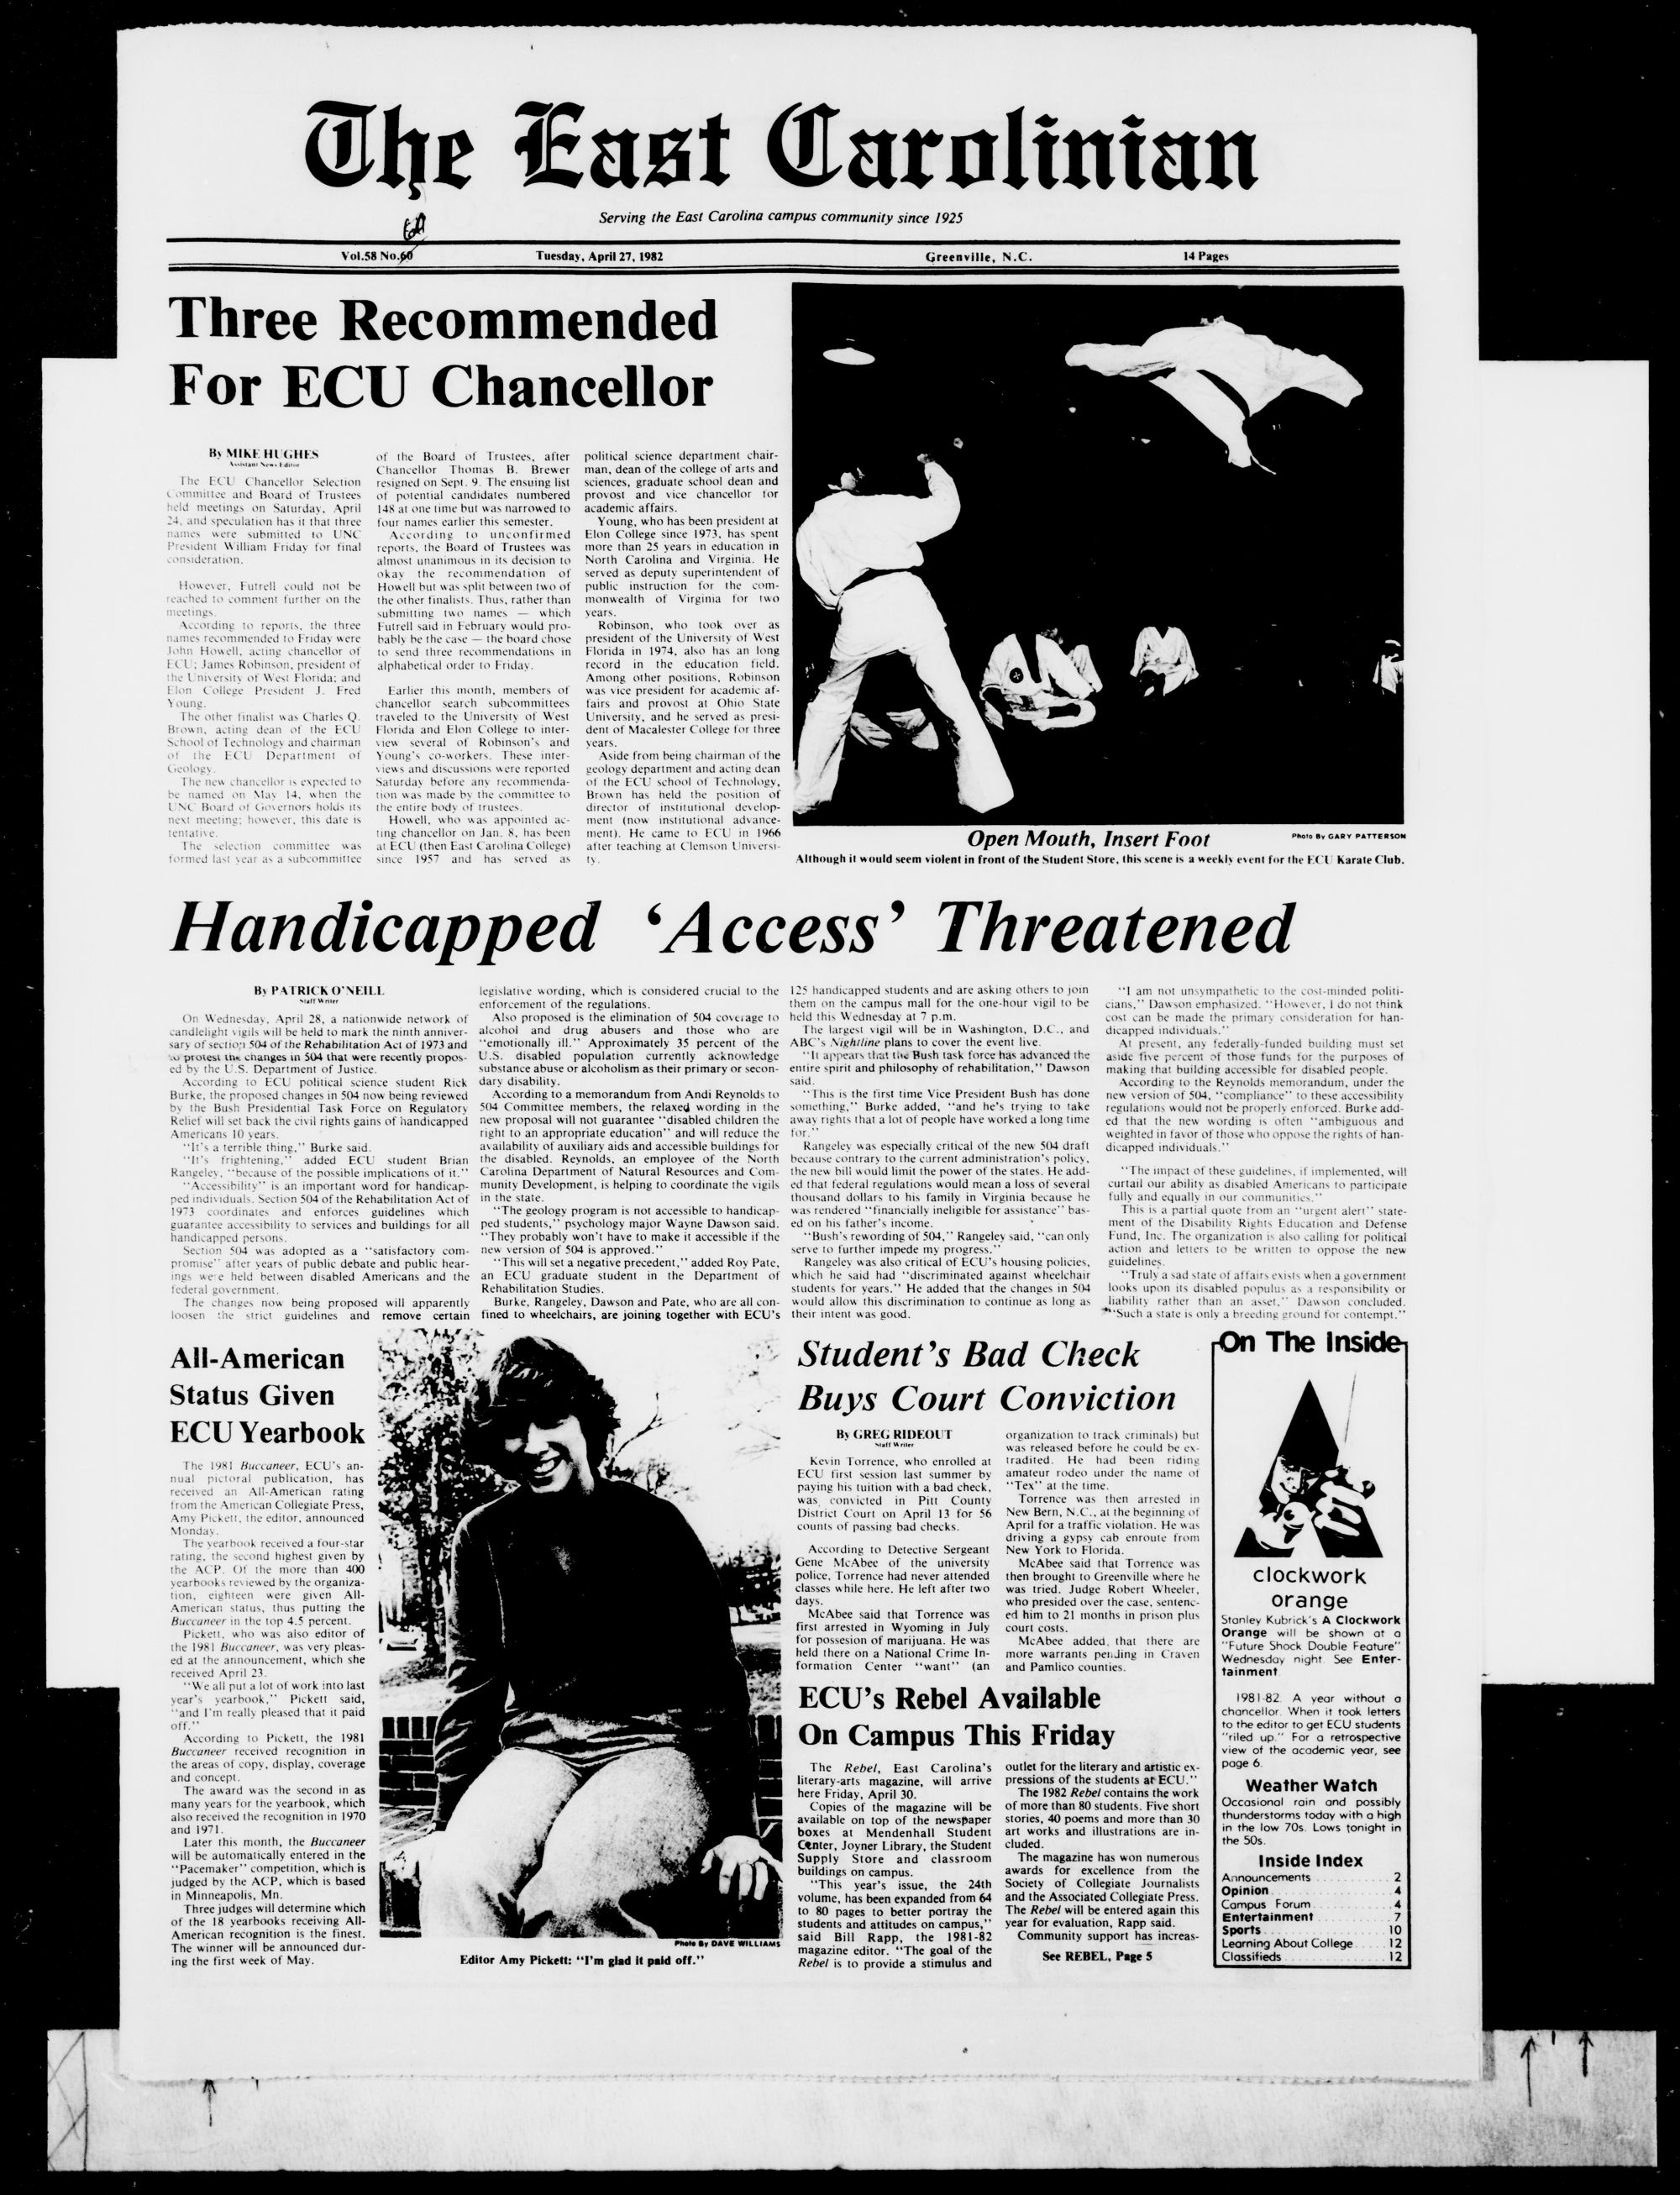 The East Carolinian, April 27, 1982